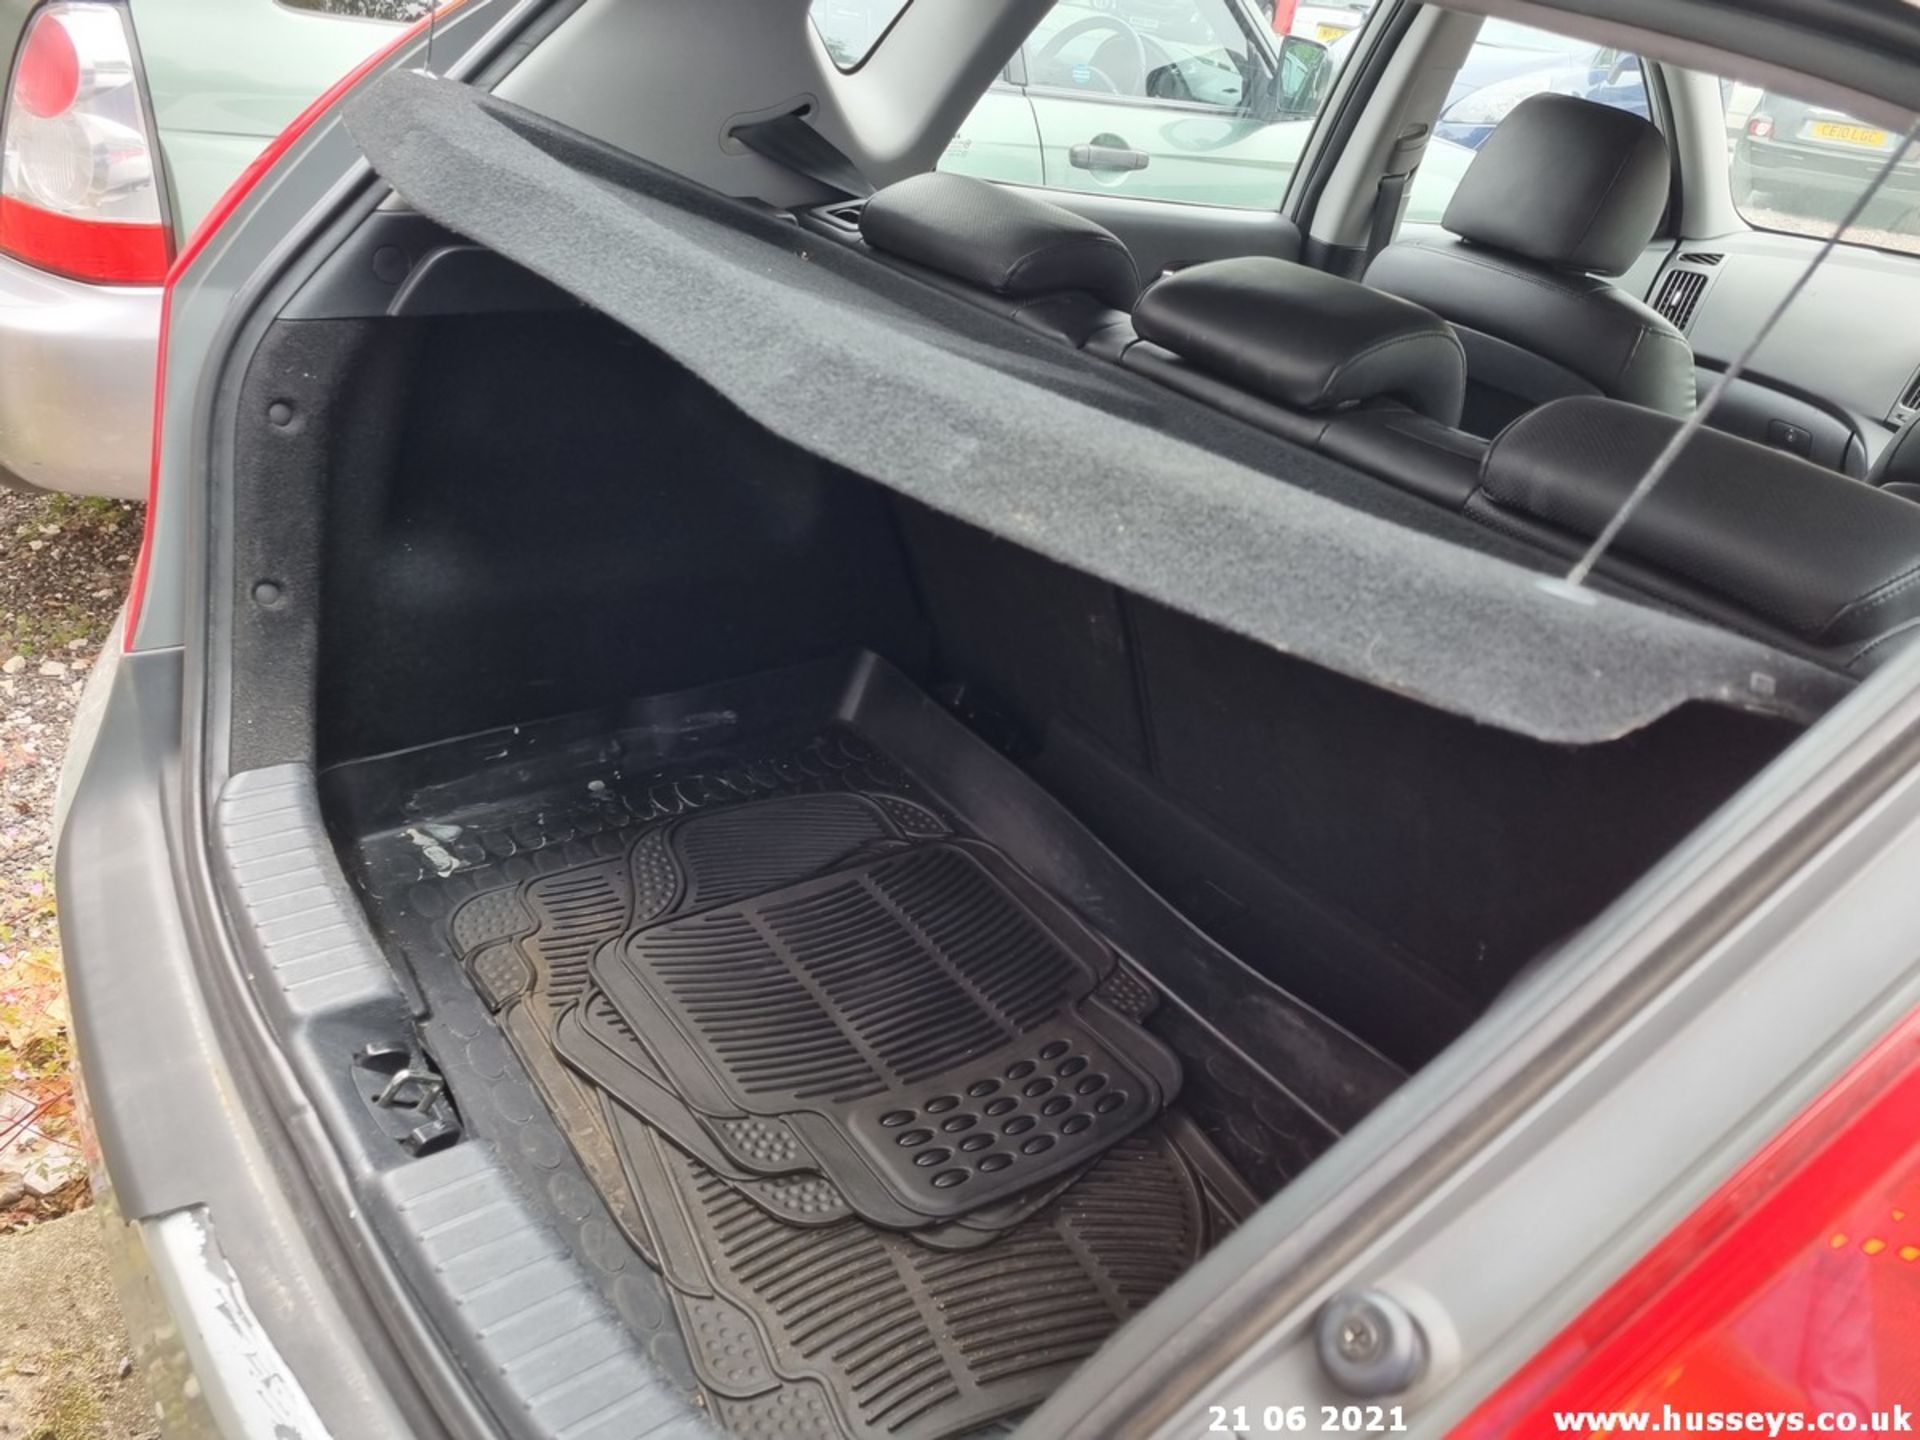 07/57 HYUNDAI I30 PREMIUM CRDI - 1582cc 5dr Hatchback (Silver, 104k) - Image 12 of 13